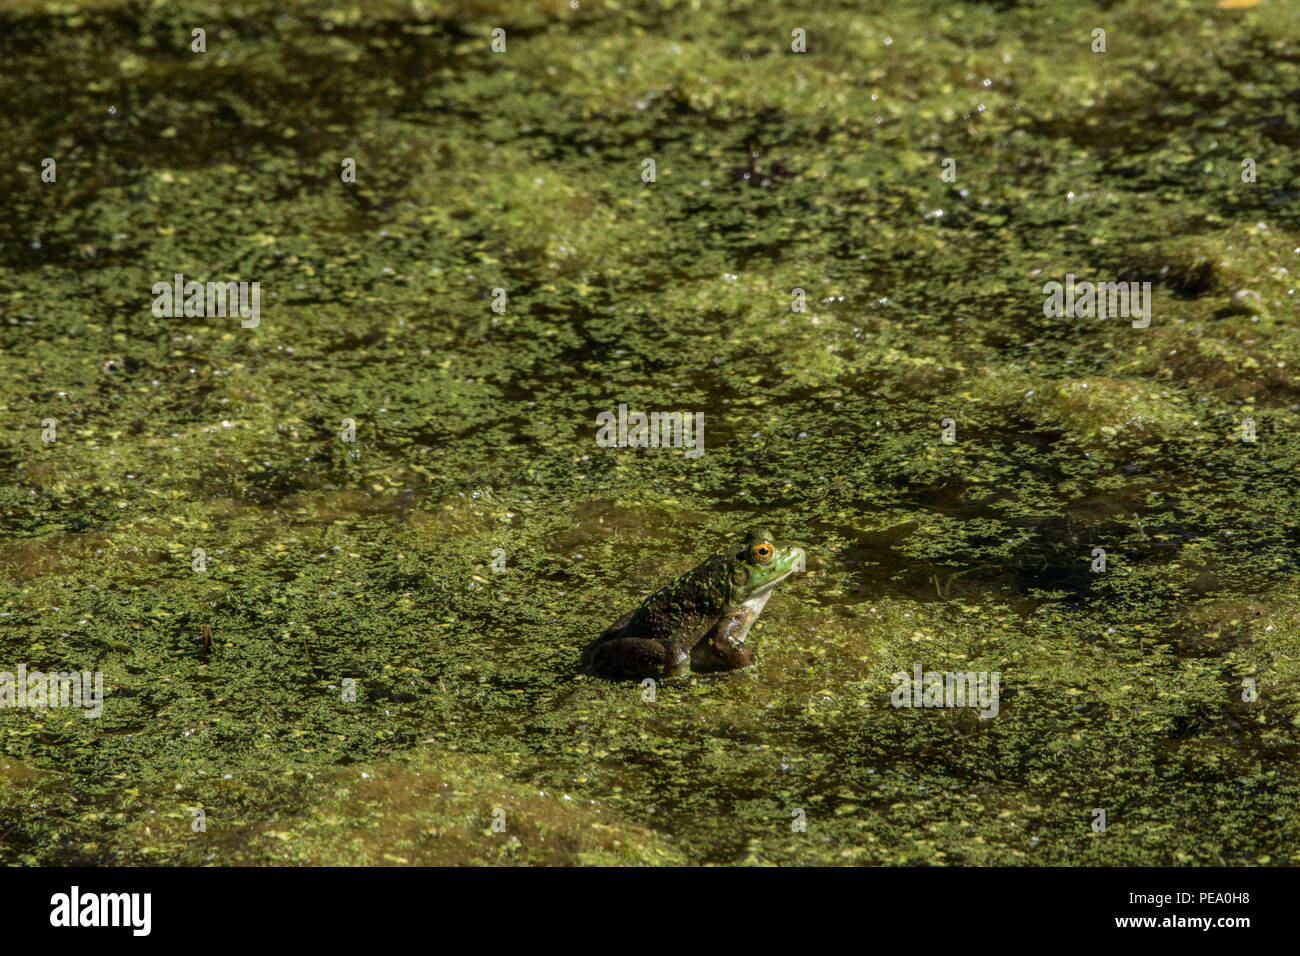 American Bullfrog (Lithobates catesbeianus) from Knox County, Illinois, USA. Stock Photo